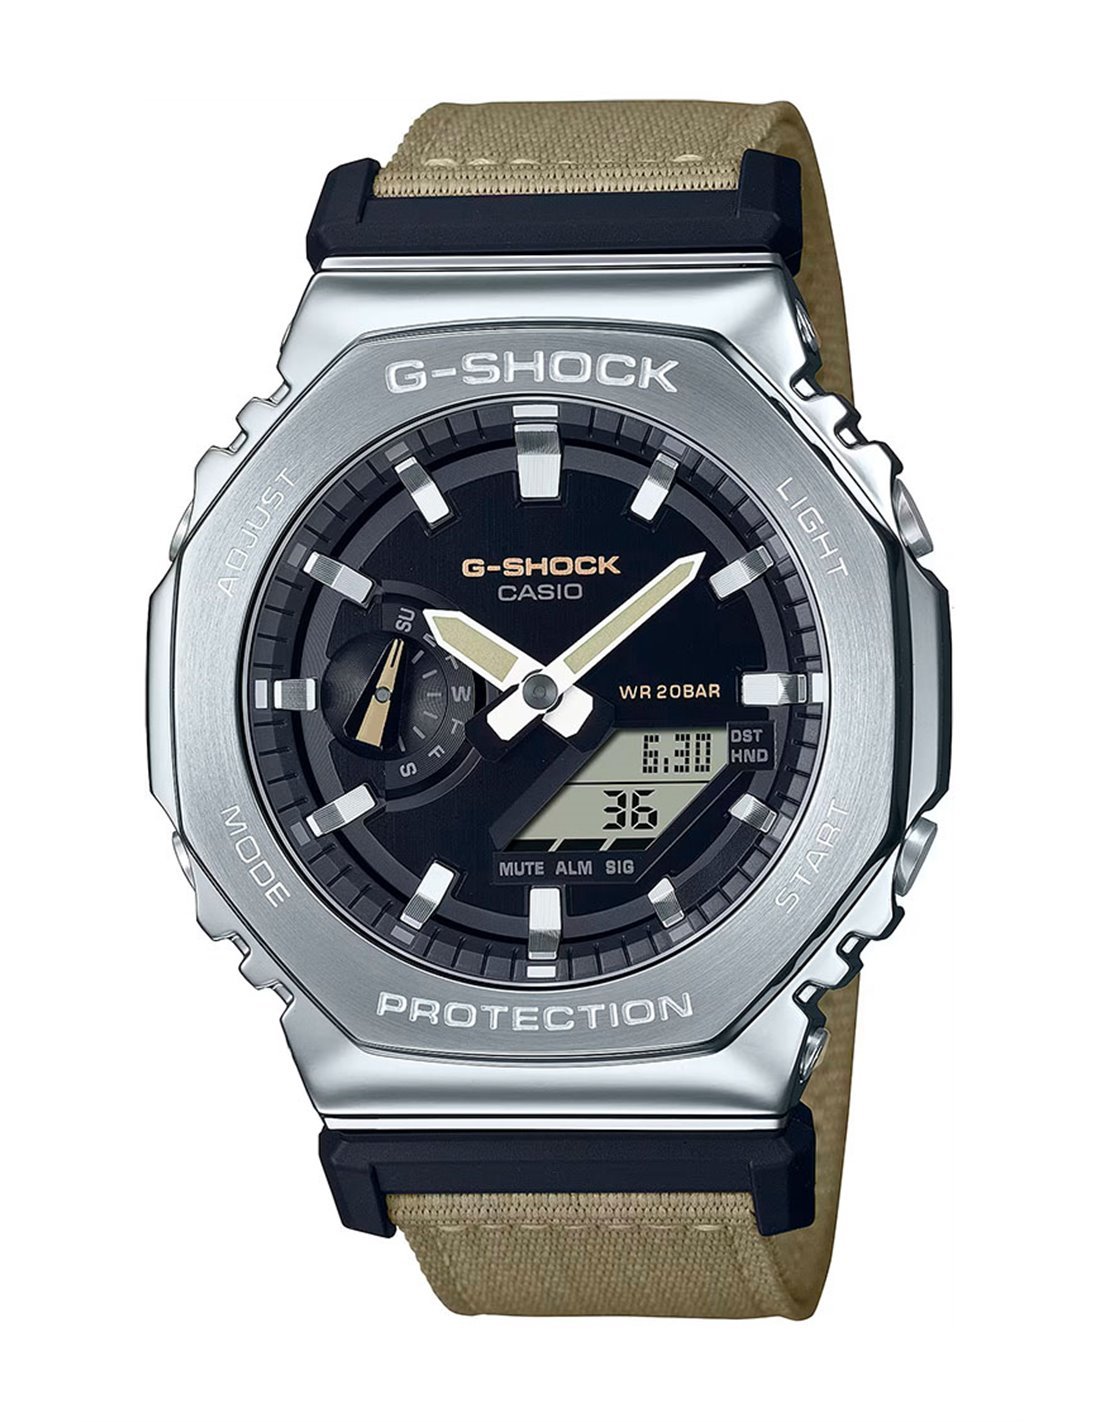 Reloj Casio G-Shock Classic Unisex Negro y Dorado Analógico y